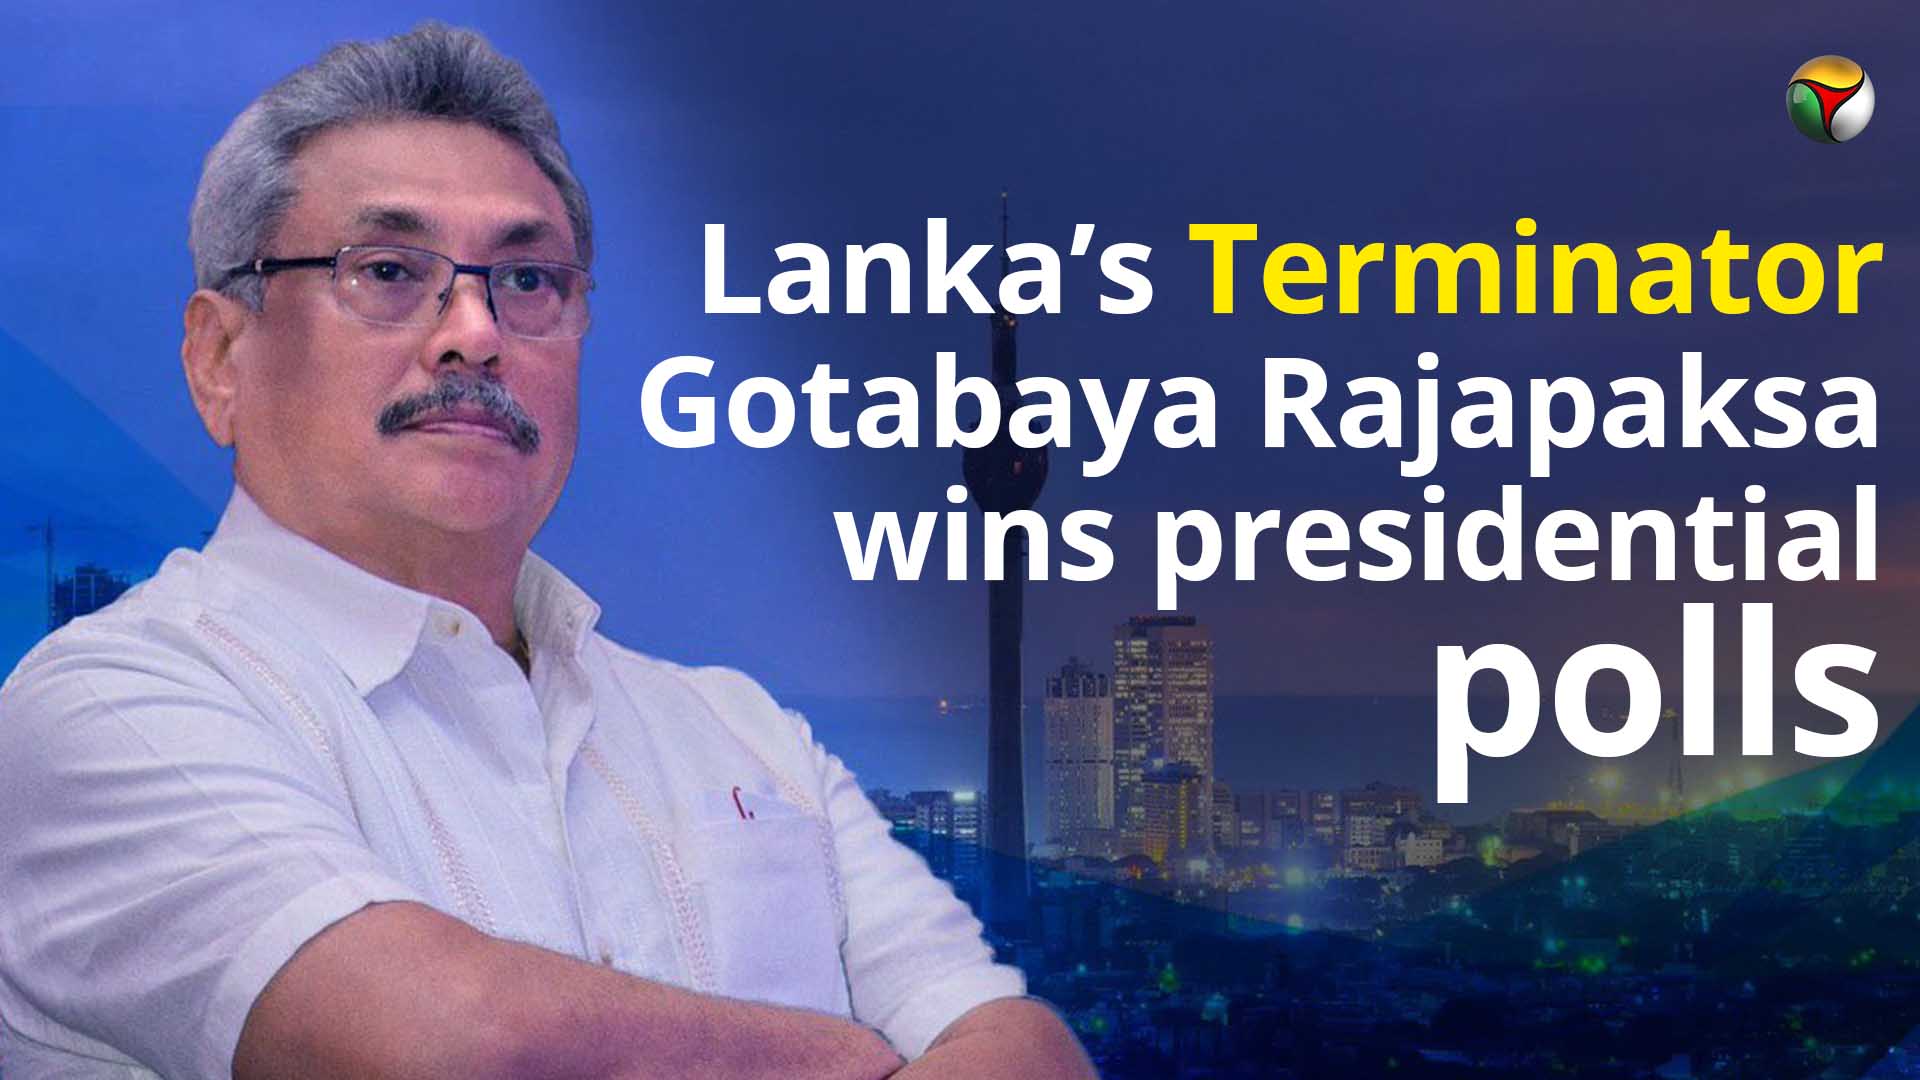 Lankas Terminator Gotabaya Rajapaksa wins presidential polls